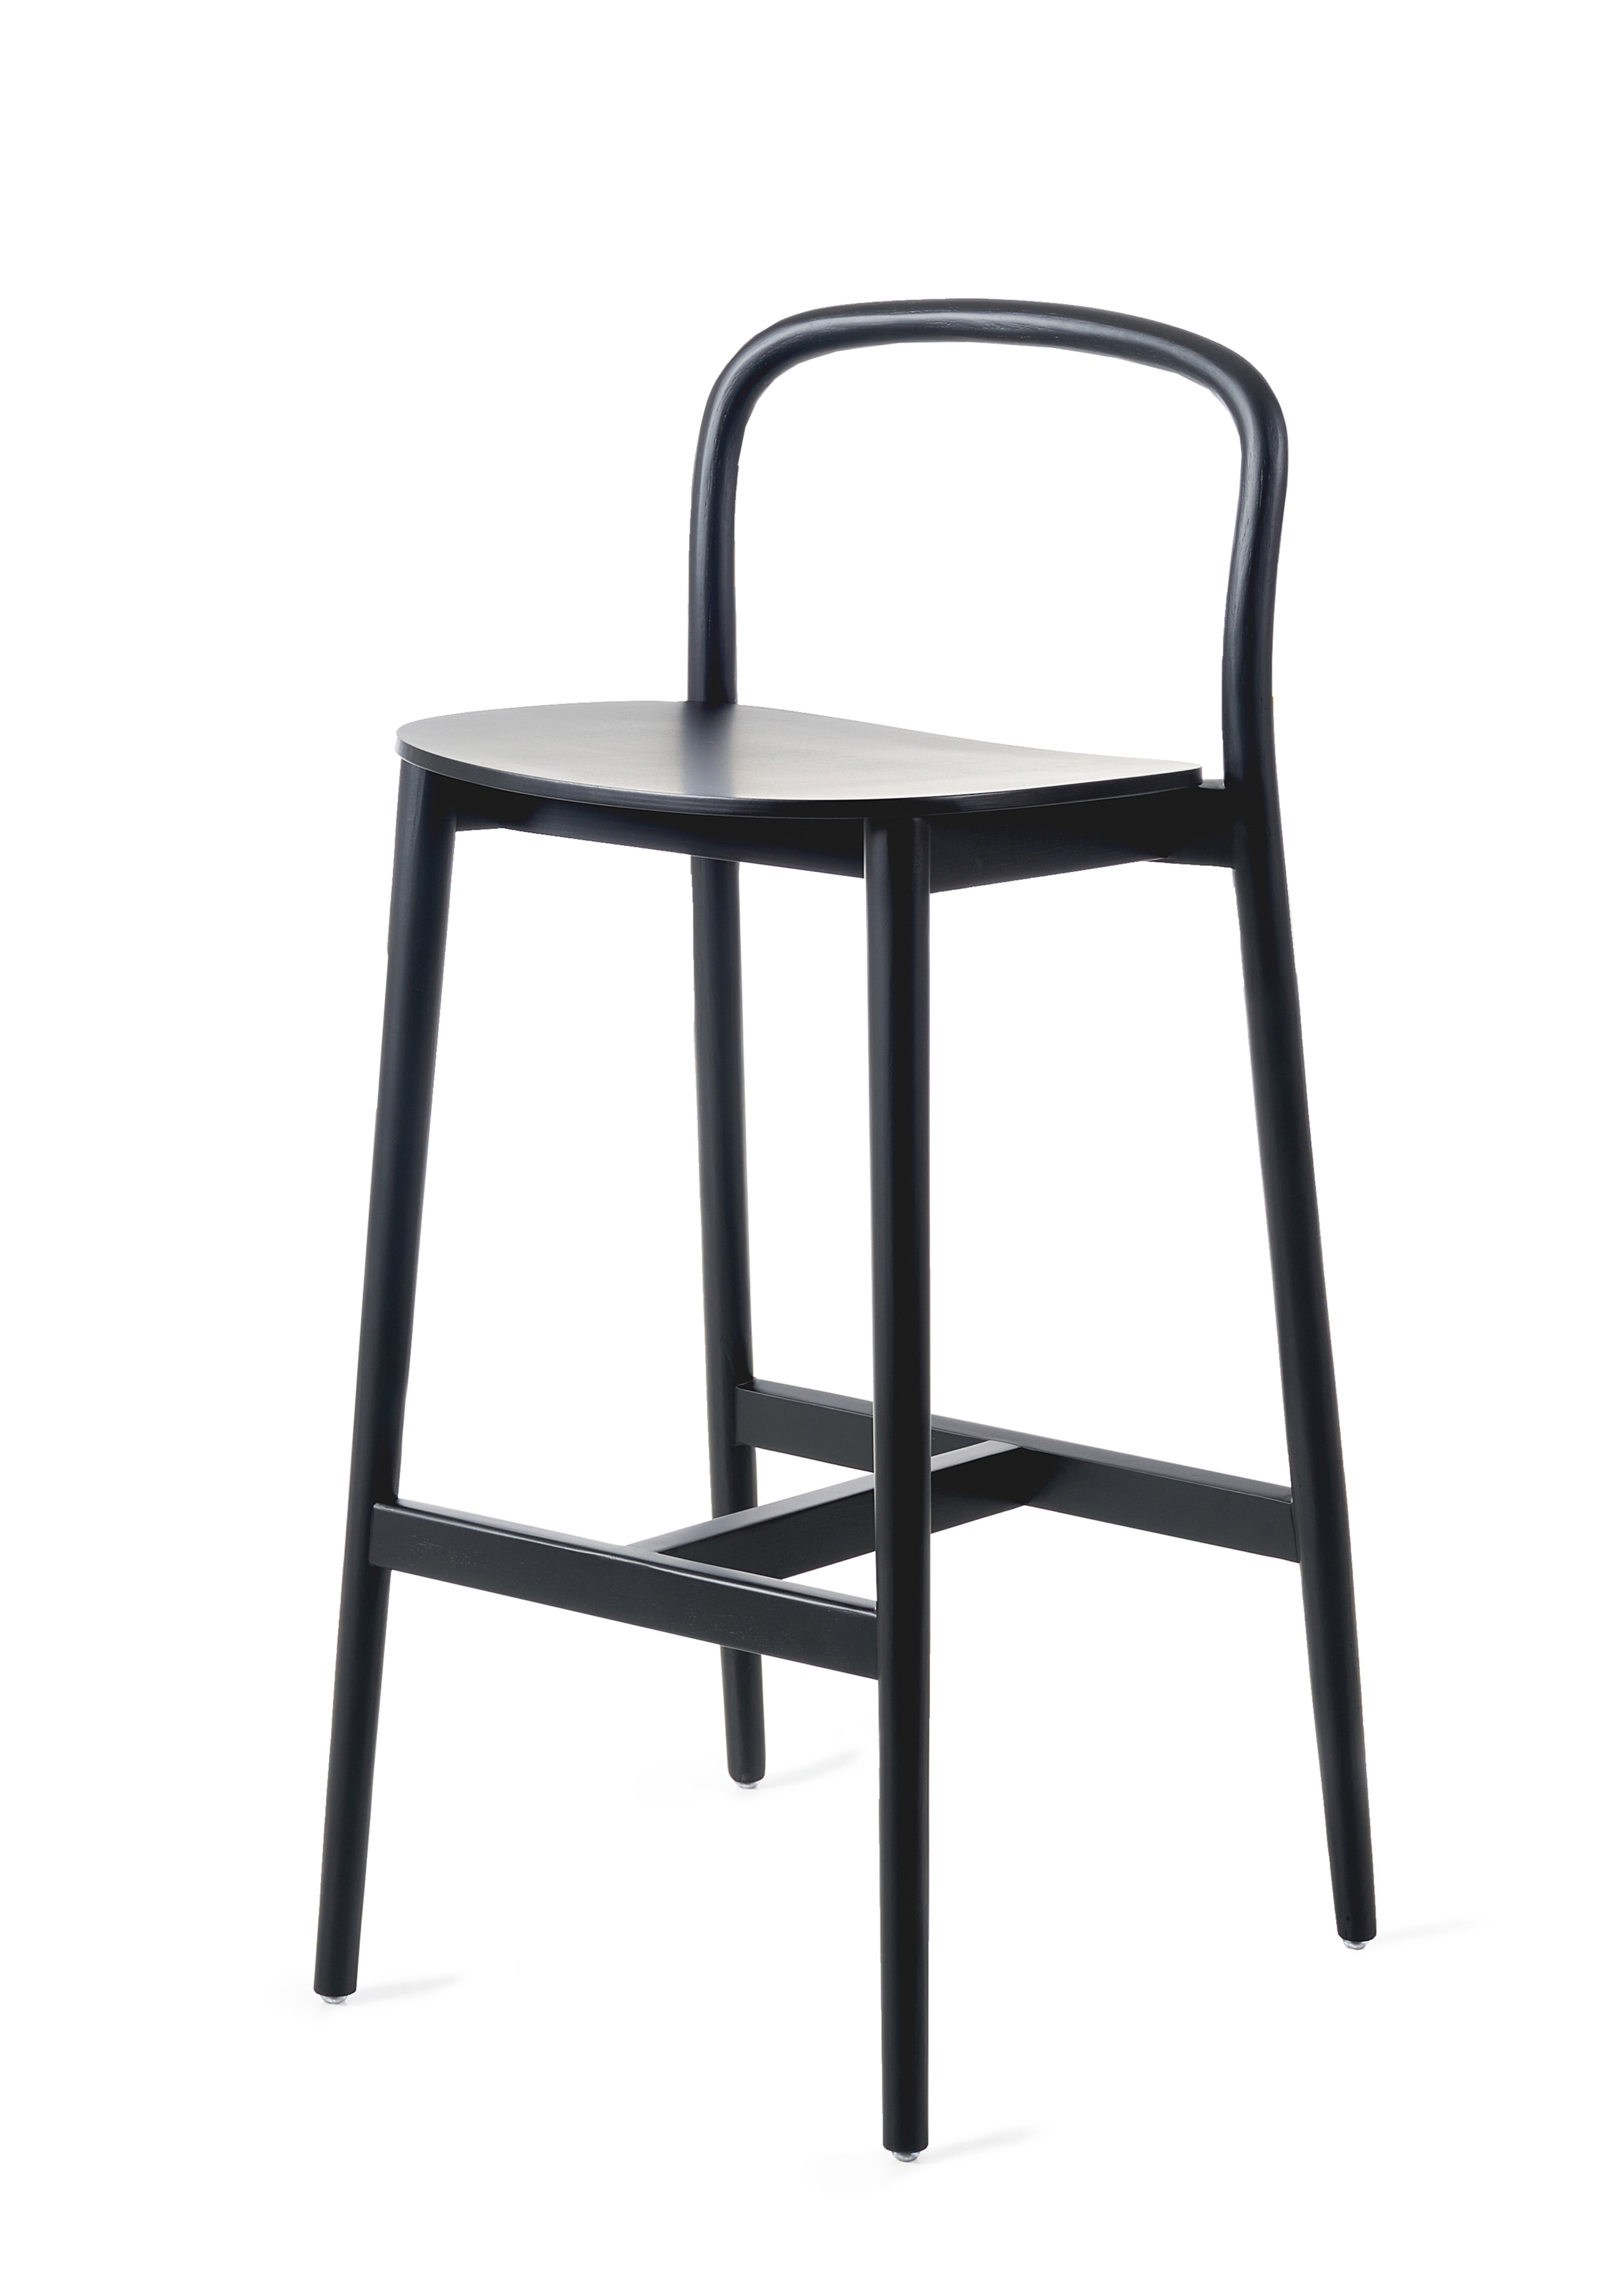 YUE stools Barstool & counter stool. Designed for Dohaus by Mikko Laakkonen.